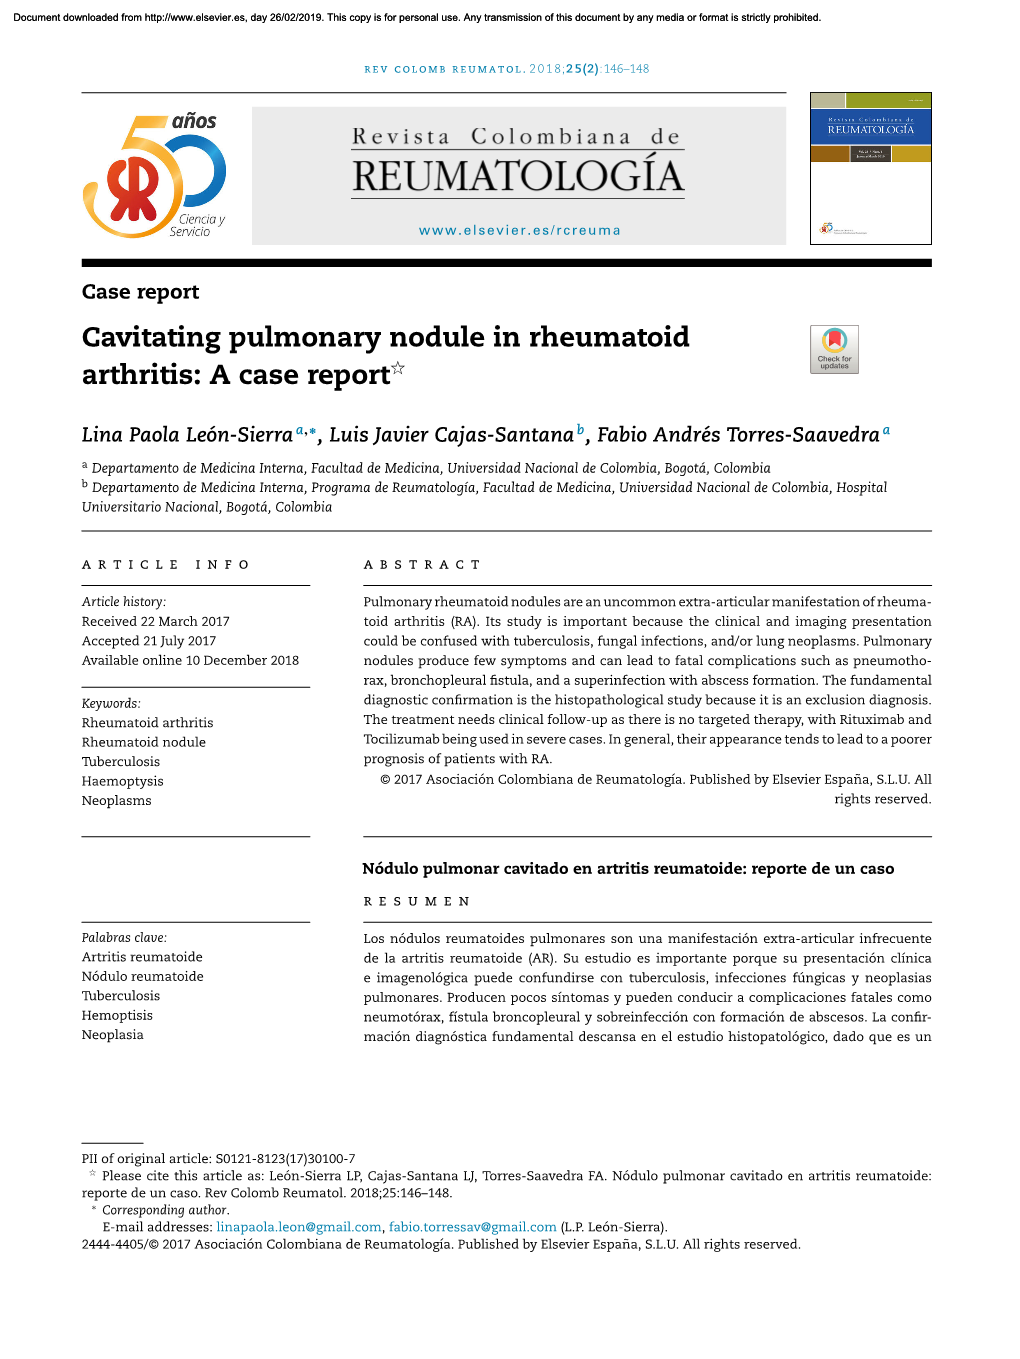 Cavitating Pulmonary Nodule in Rheumatoid Arthritis: a Case Report